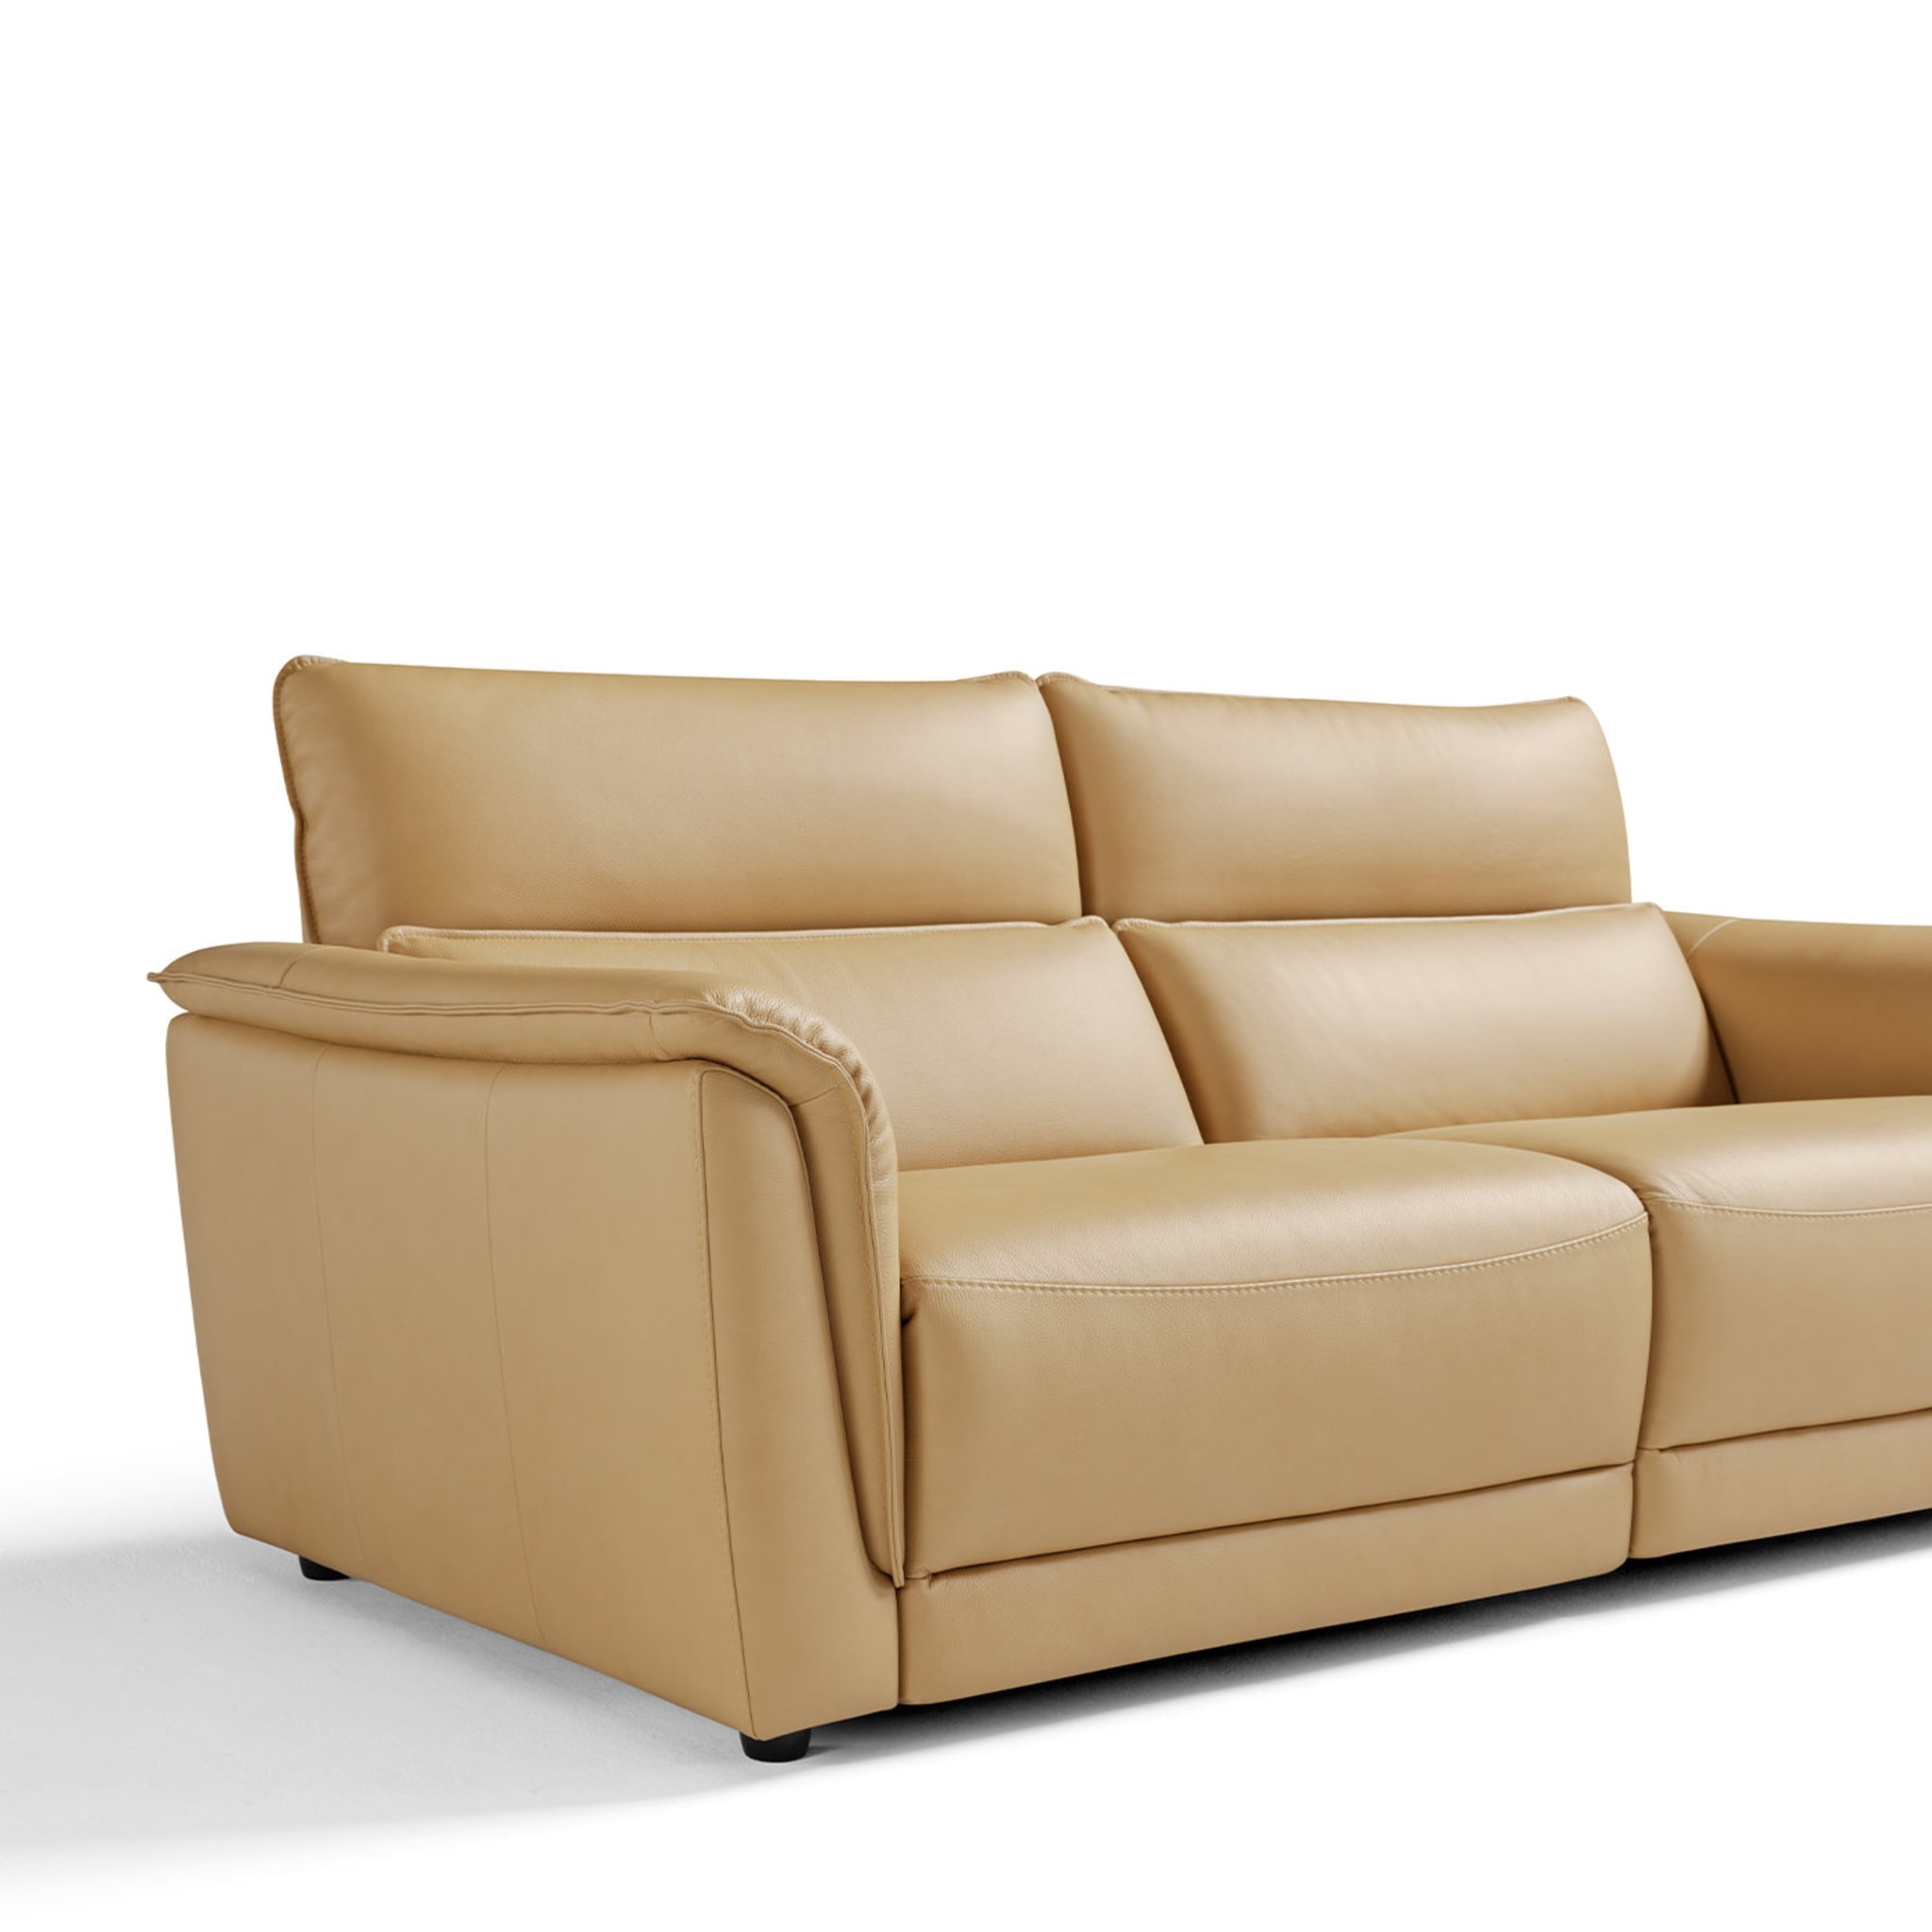 Bovino Sand Leather 2-Seater Armchair - Alternative view 1